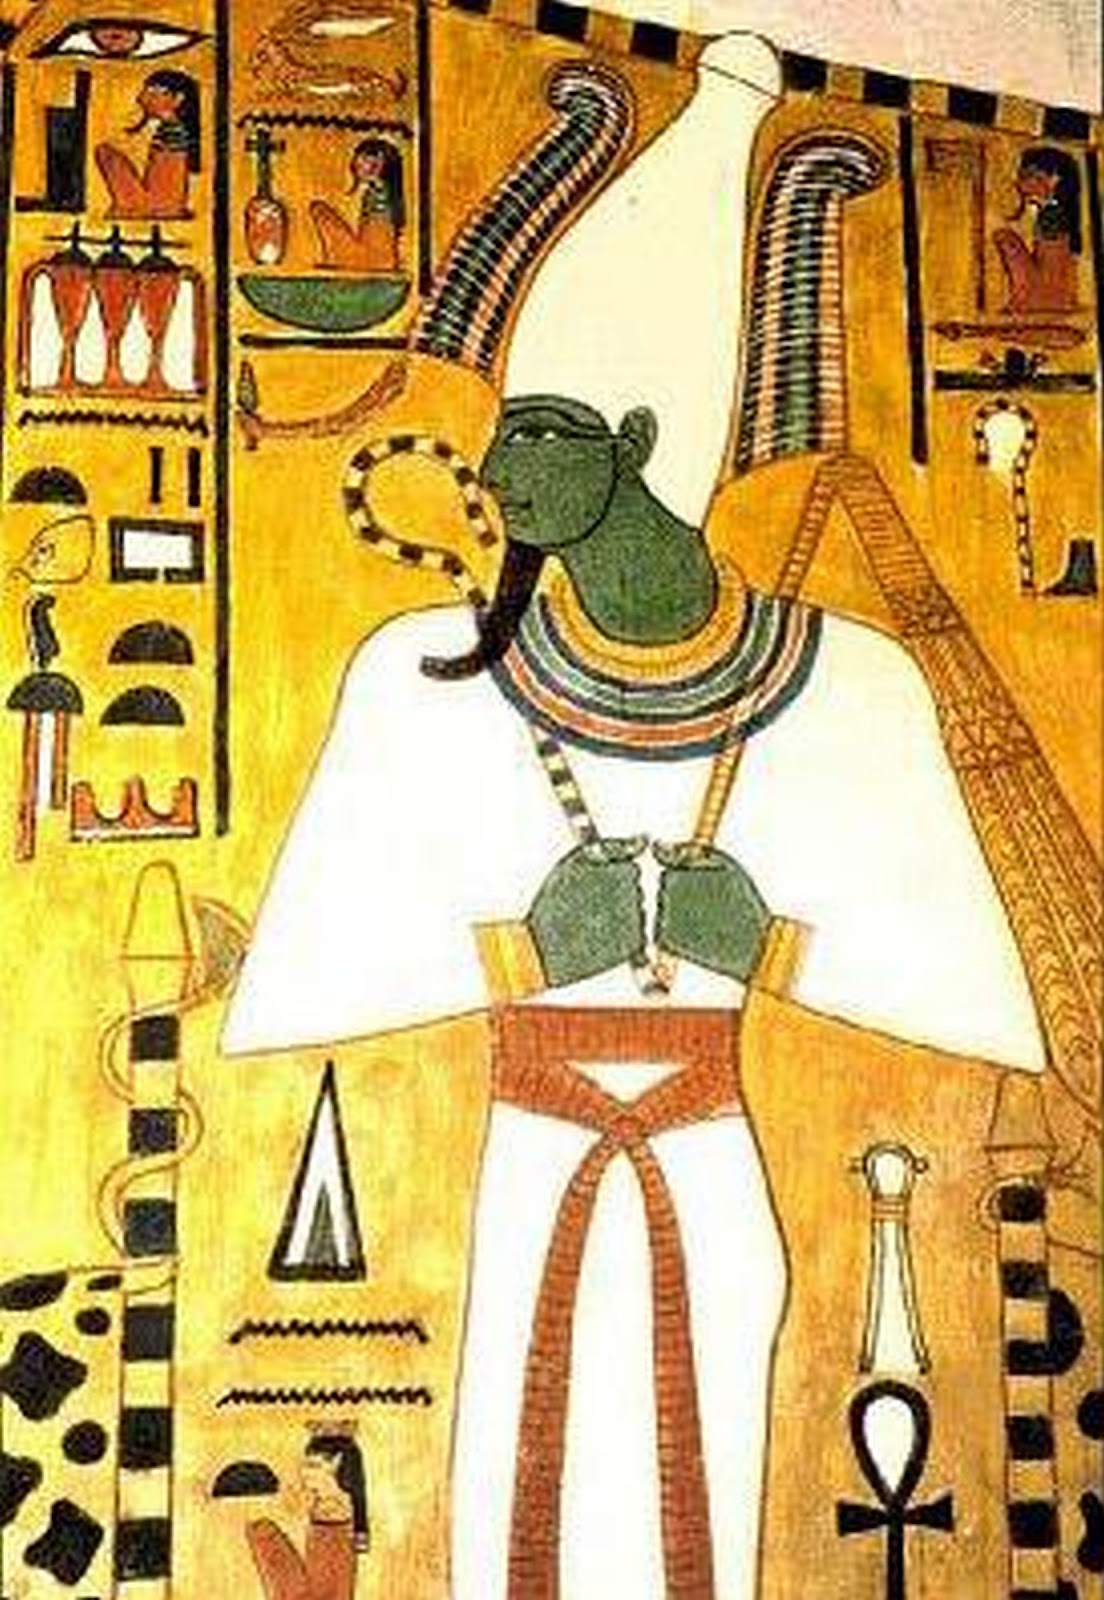 https://upload.wikimedia.org/wikipedia/commons/8/8e/Osiris-tomb-of-Nefertari.jpg